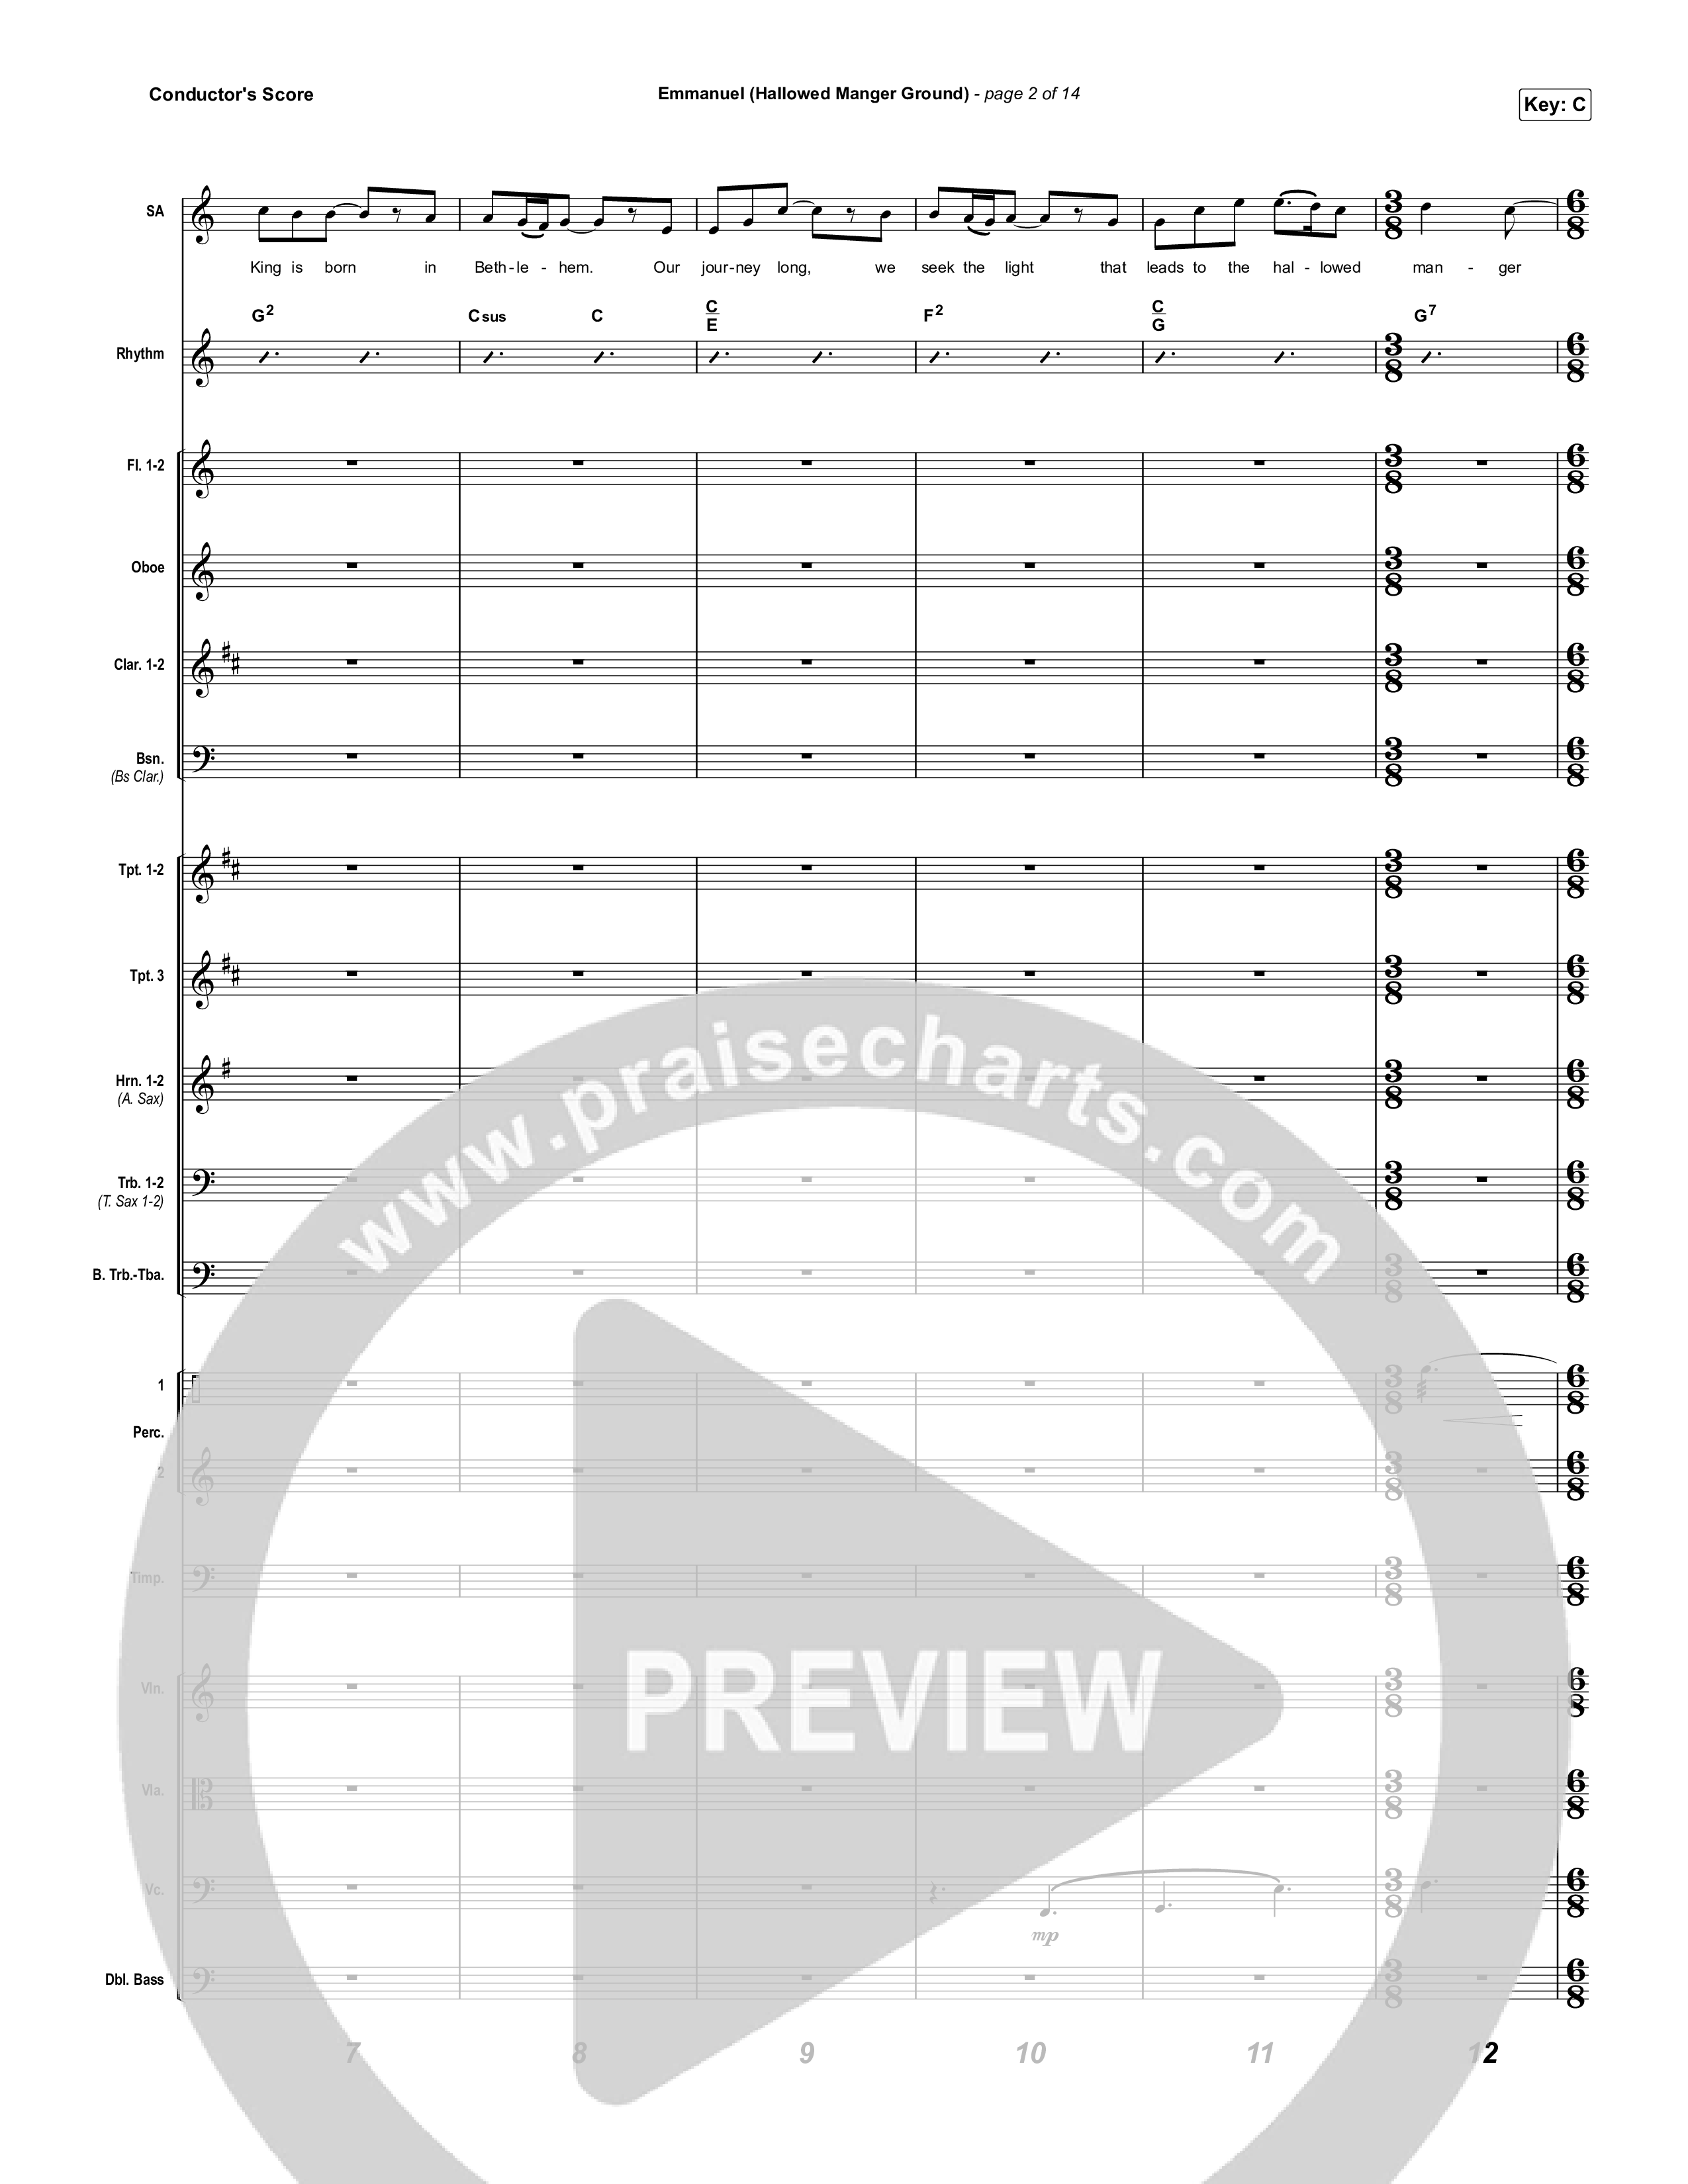 Emmanuel (Hallowed Manger Ground) Conductor's Score (Chris Tomlin)